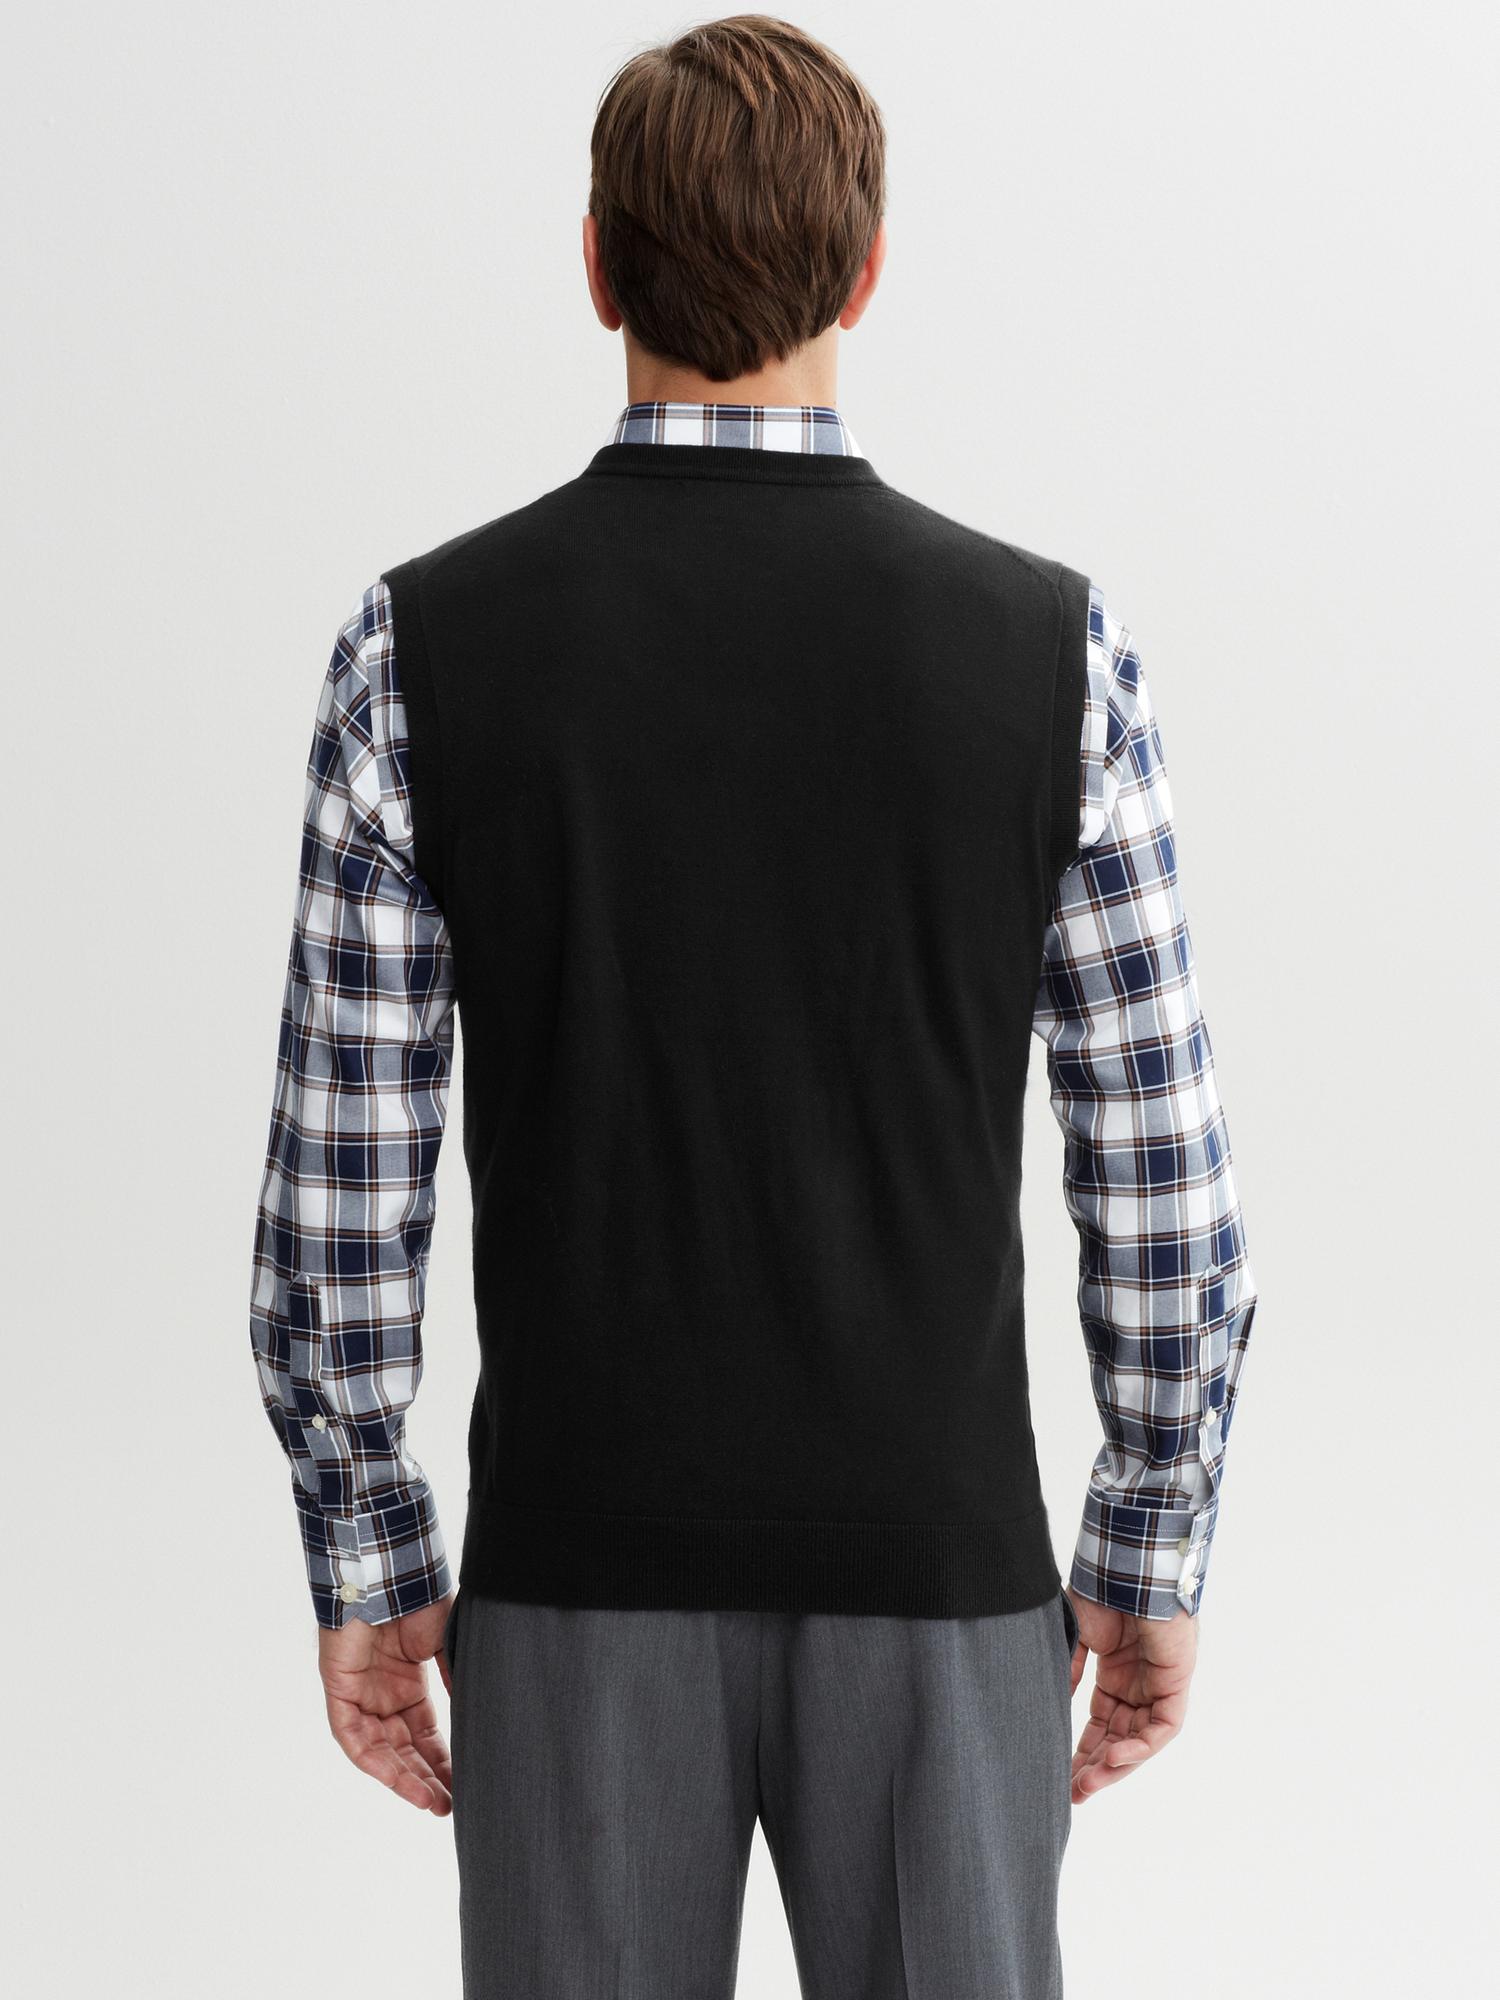 Silk-cotton sweater vest